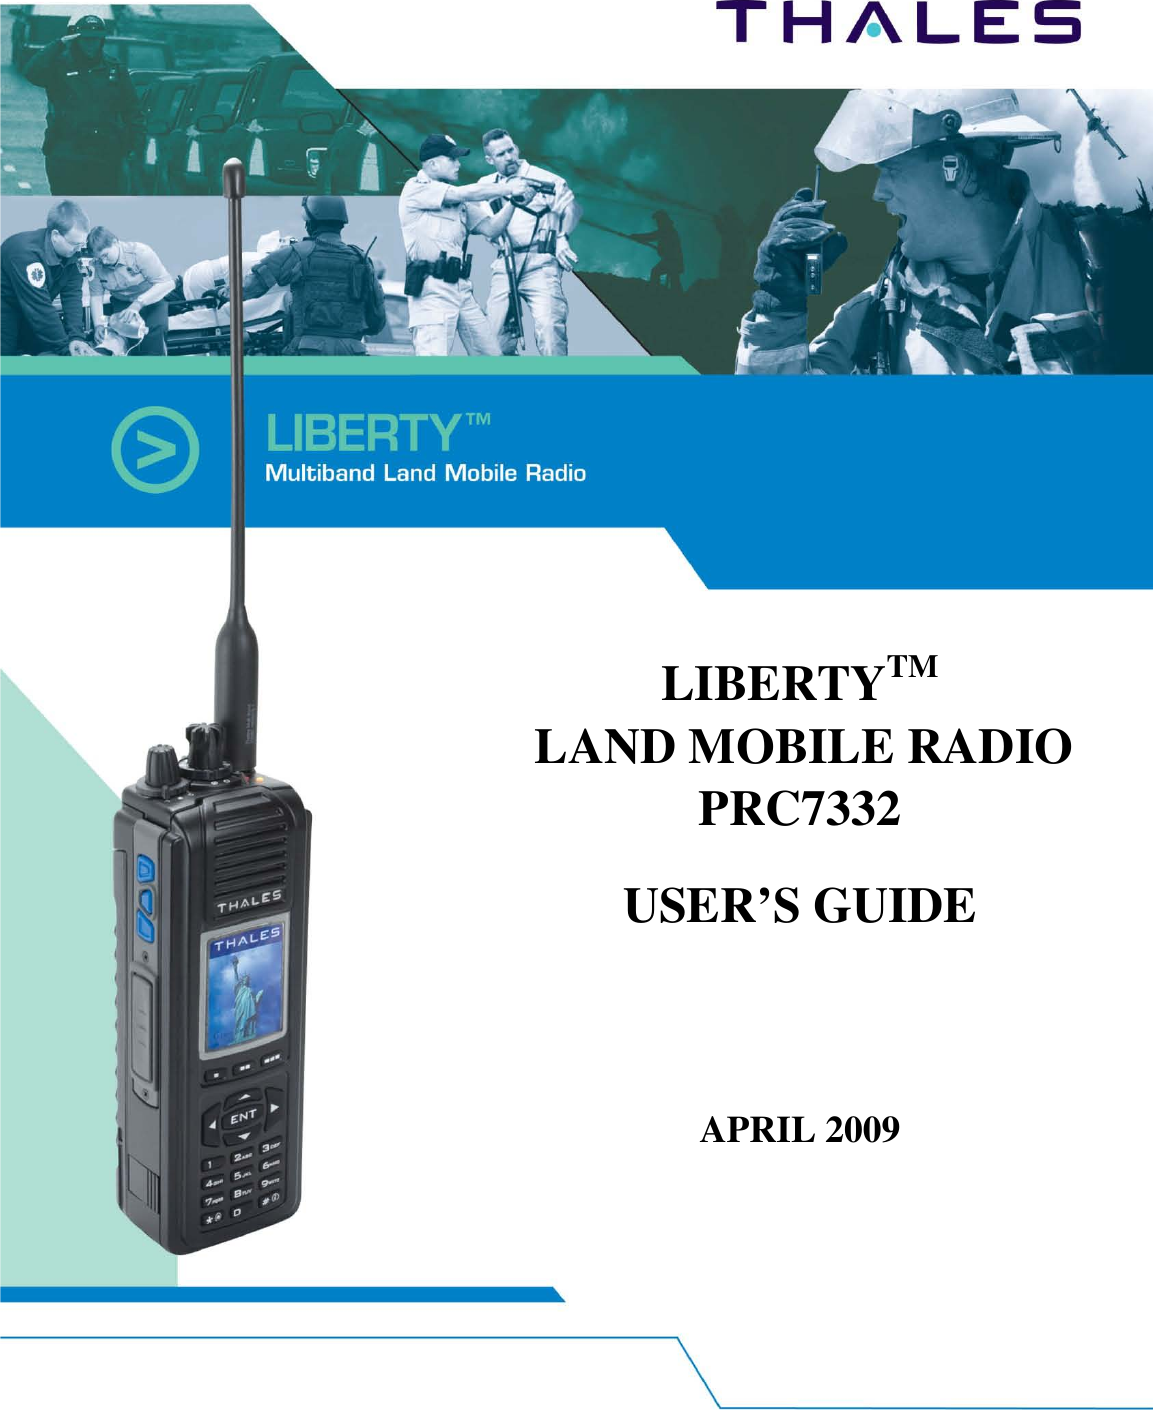      LIBERTYTM  LAND MOBILE RADIO PRC7332  USER’S GUIDE      APRIL 2009 